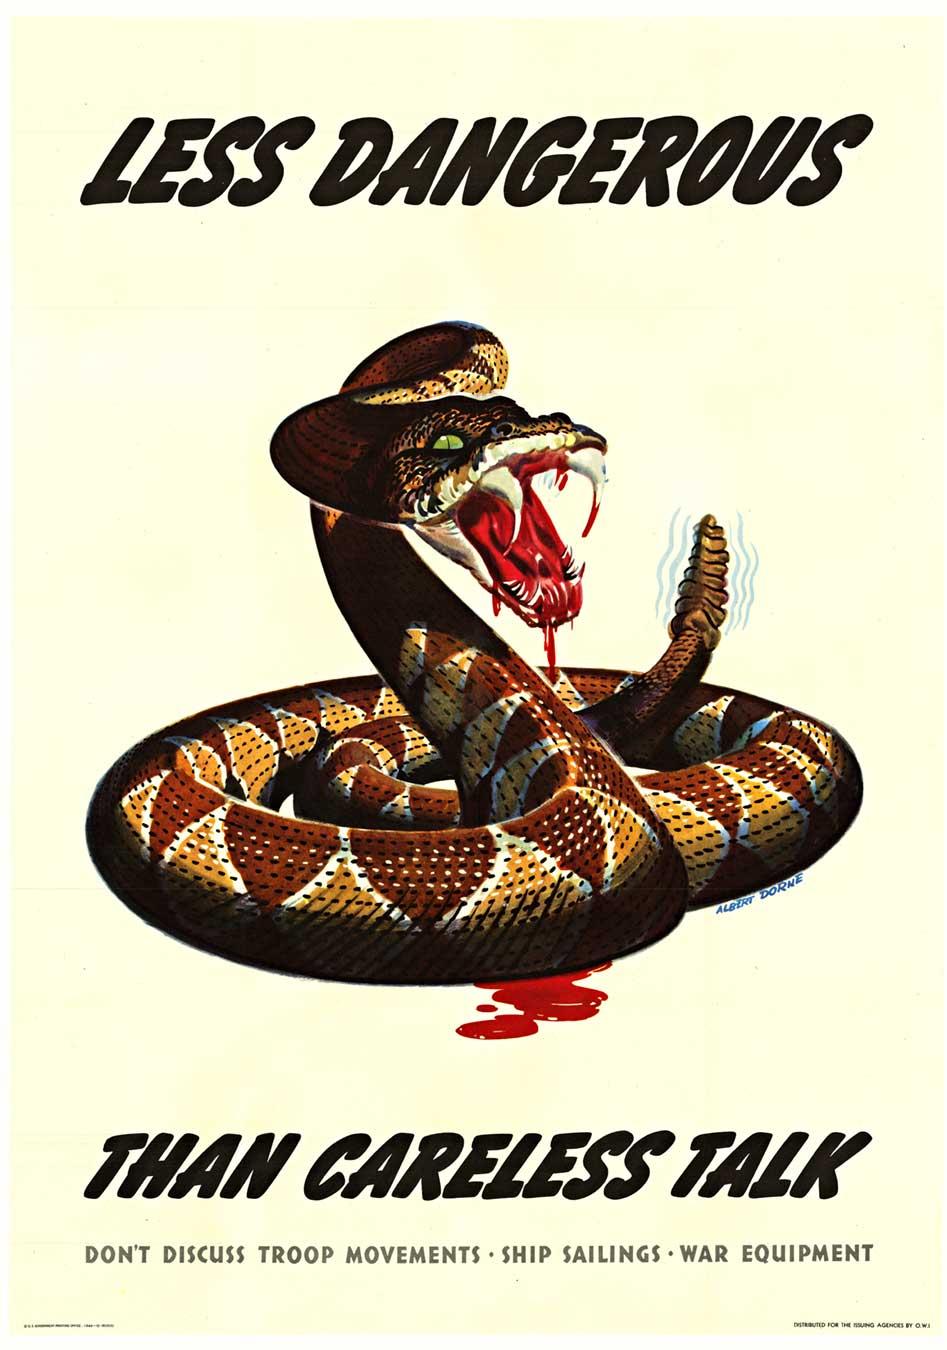 Albert Dorne Print - Original "Less Dangerous than Careless Talk" vintage World War Two poster